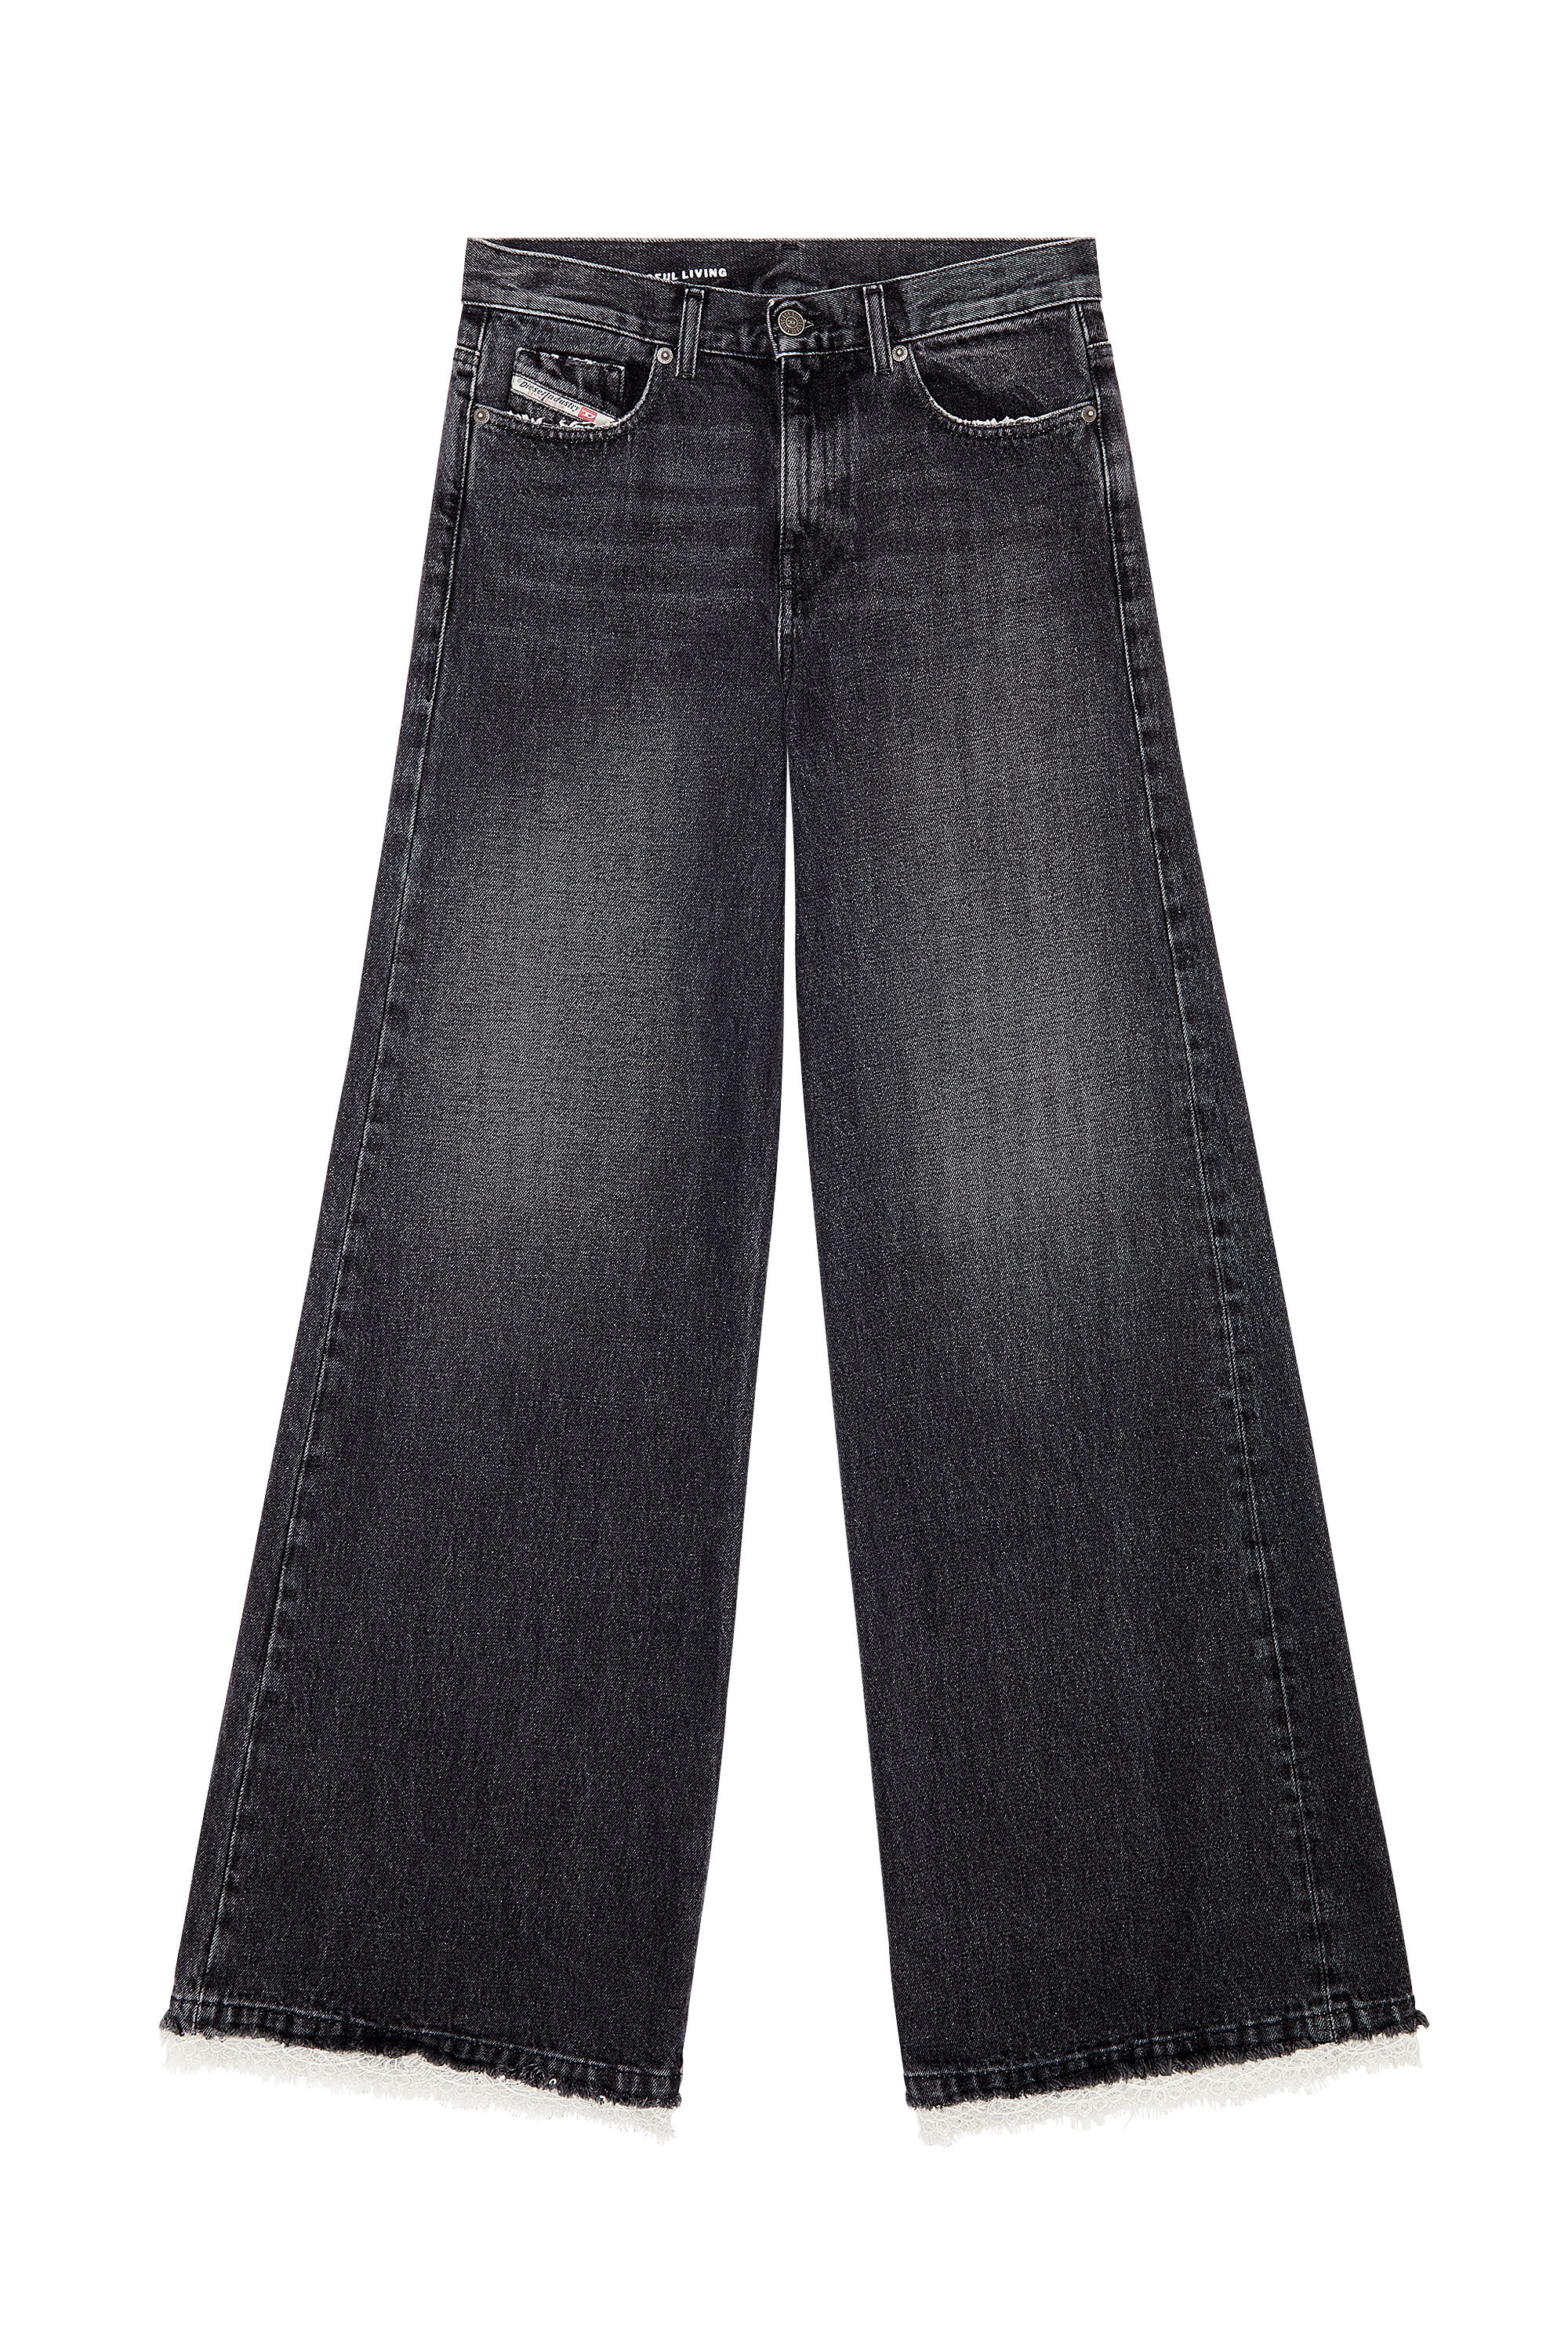 Women's Bootcut and Flare Jeans | Black/Dark grey | Diesel 1978 D-Akemi